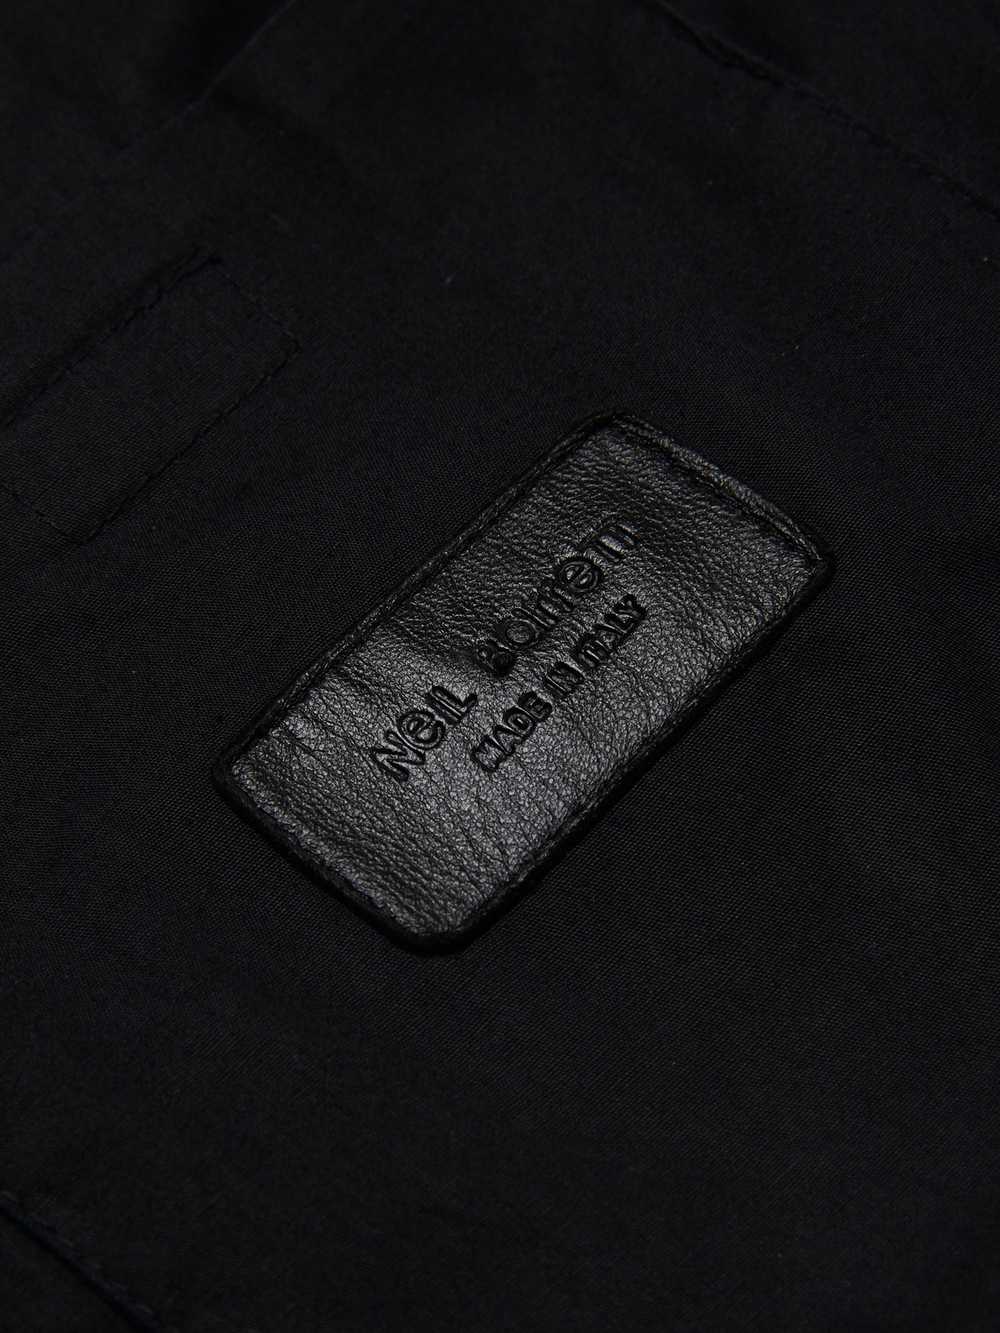 Neil Barrett Leather Jacket - image 5